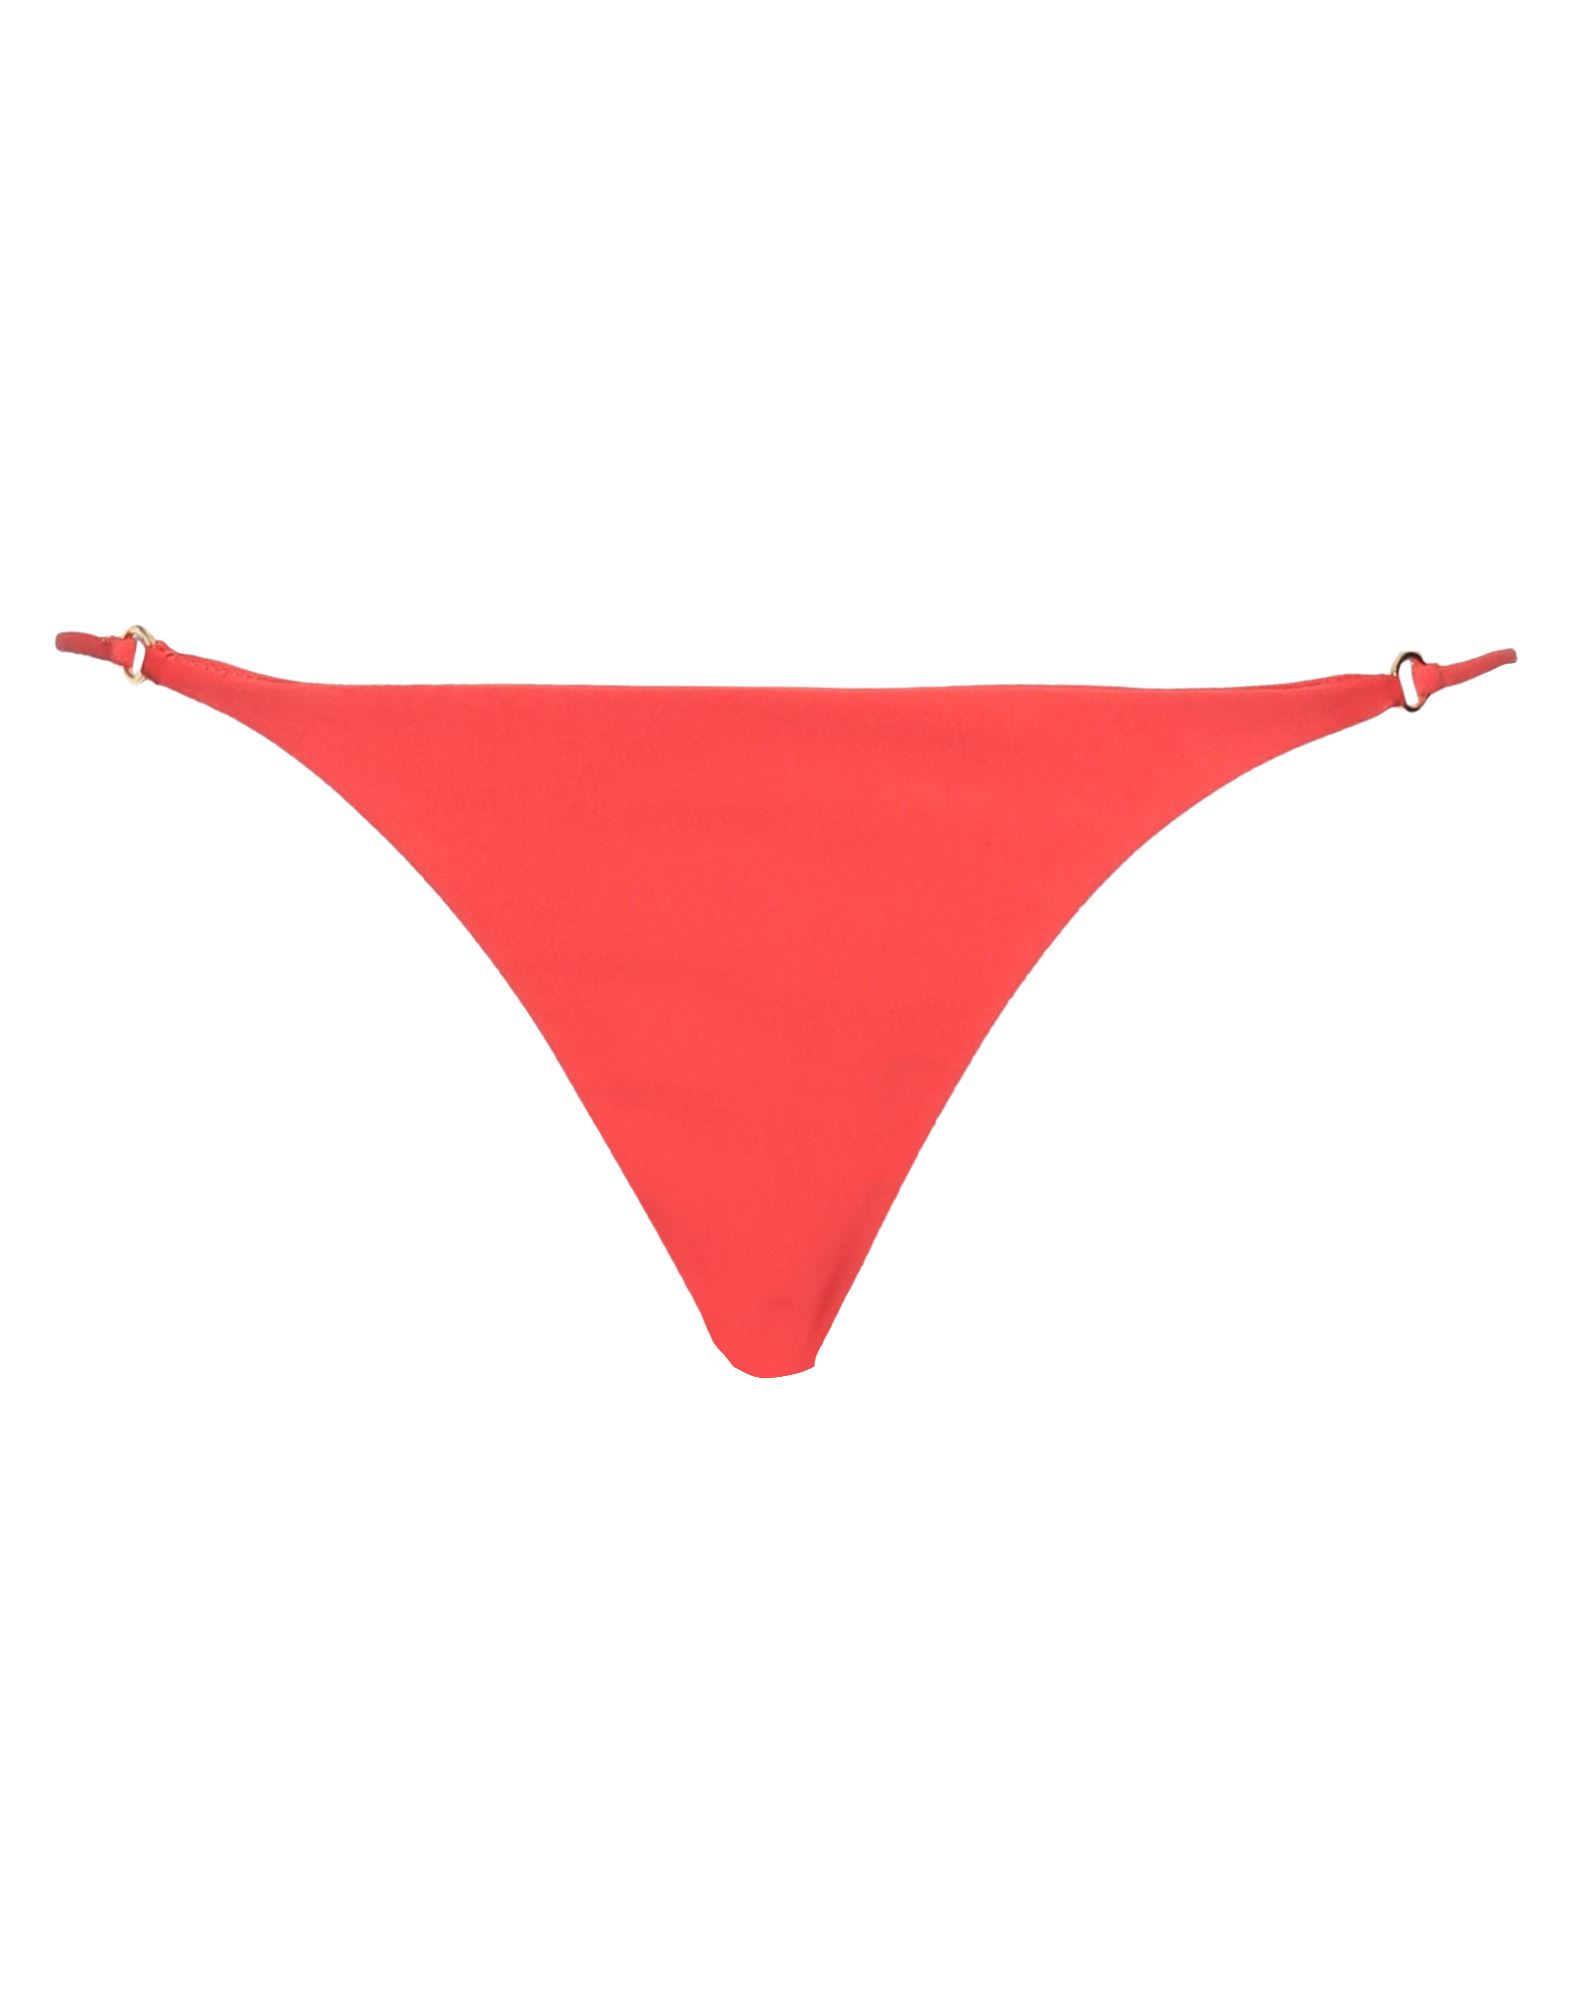 JADE SWIM Bikinislip & Badehose Damen Rot von JADE SWIM